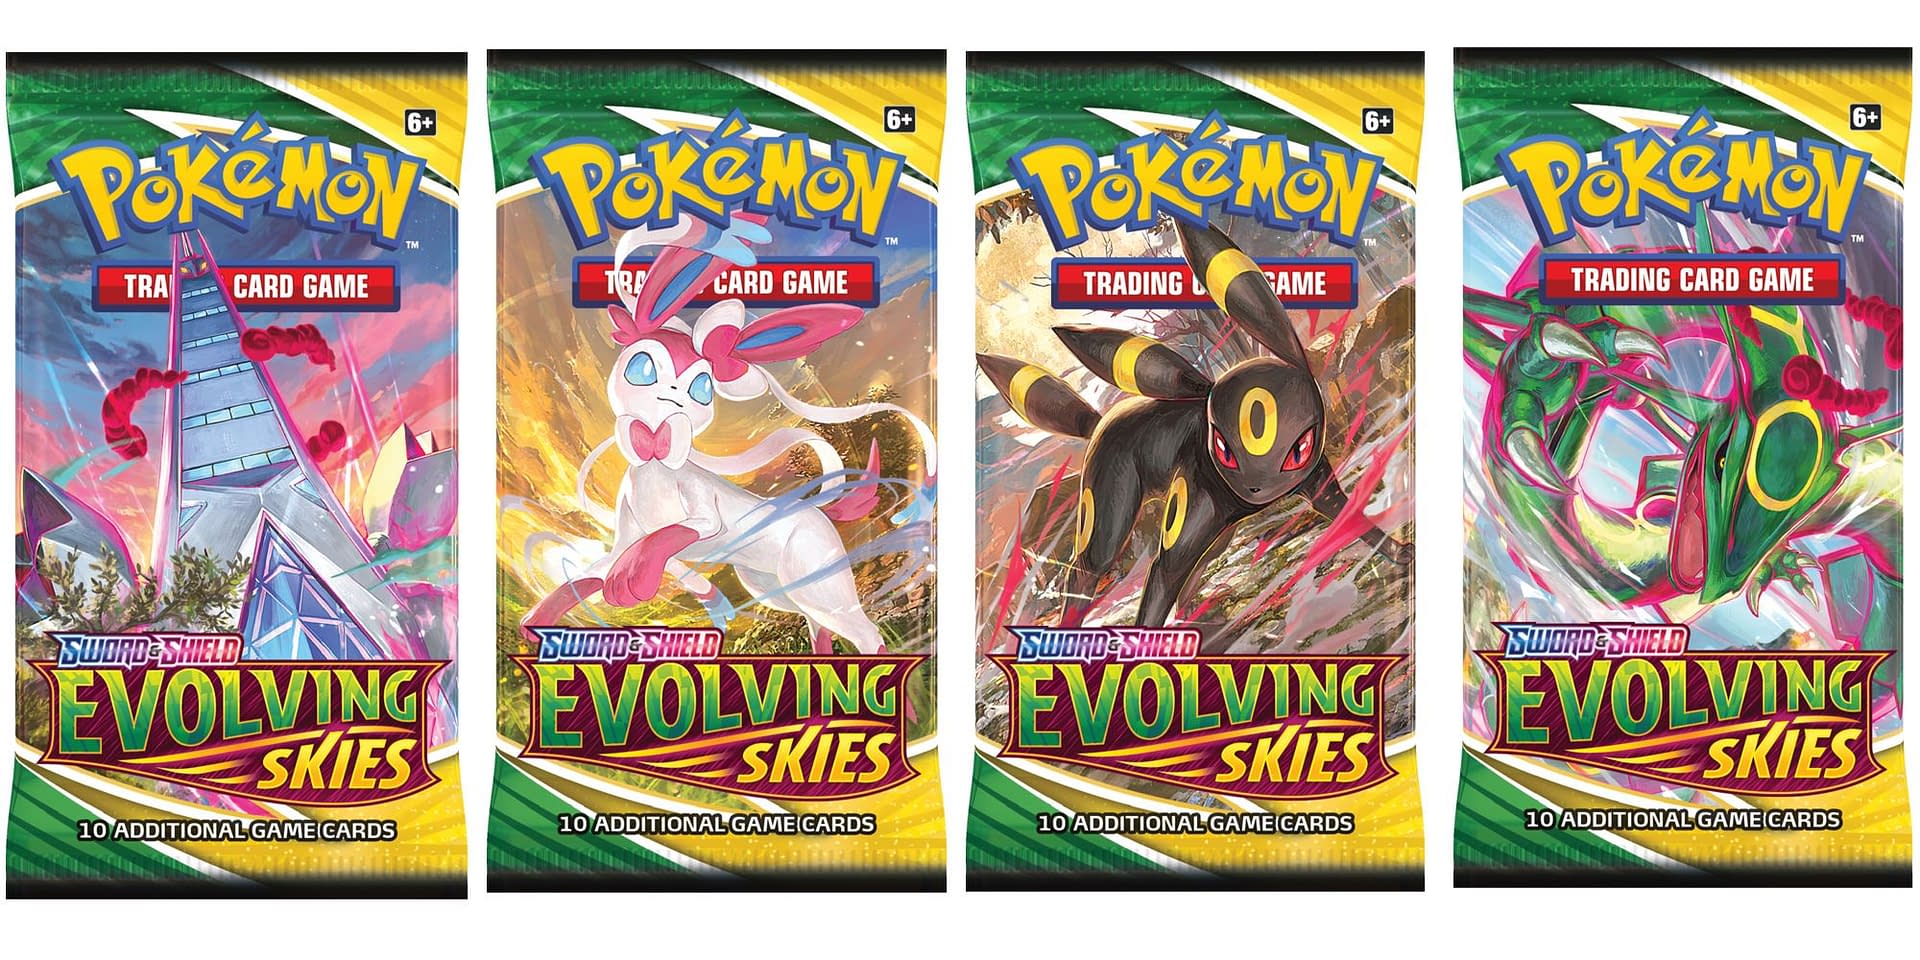 Pokémon TCG Evolving Skies Features Eeveelutions, Rayquaza, & More